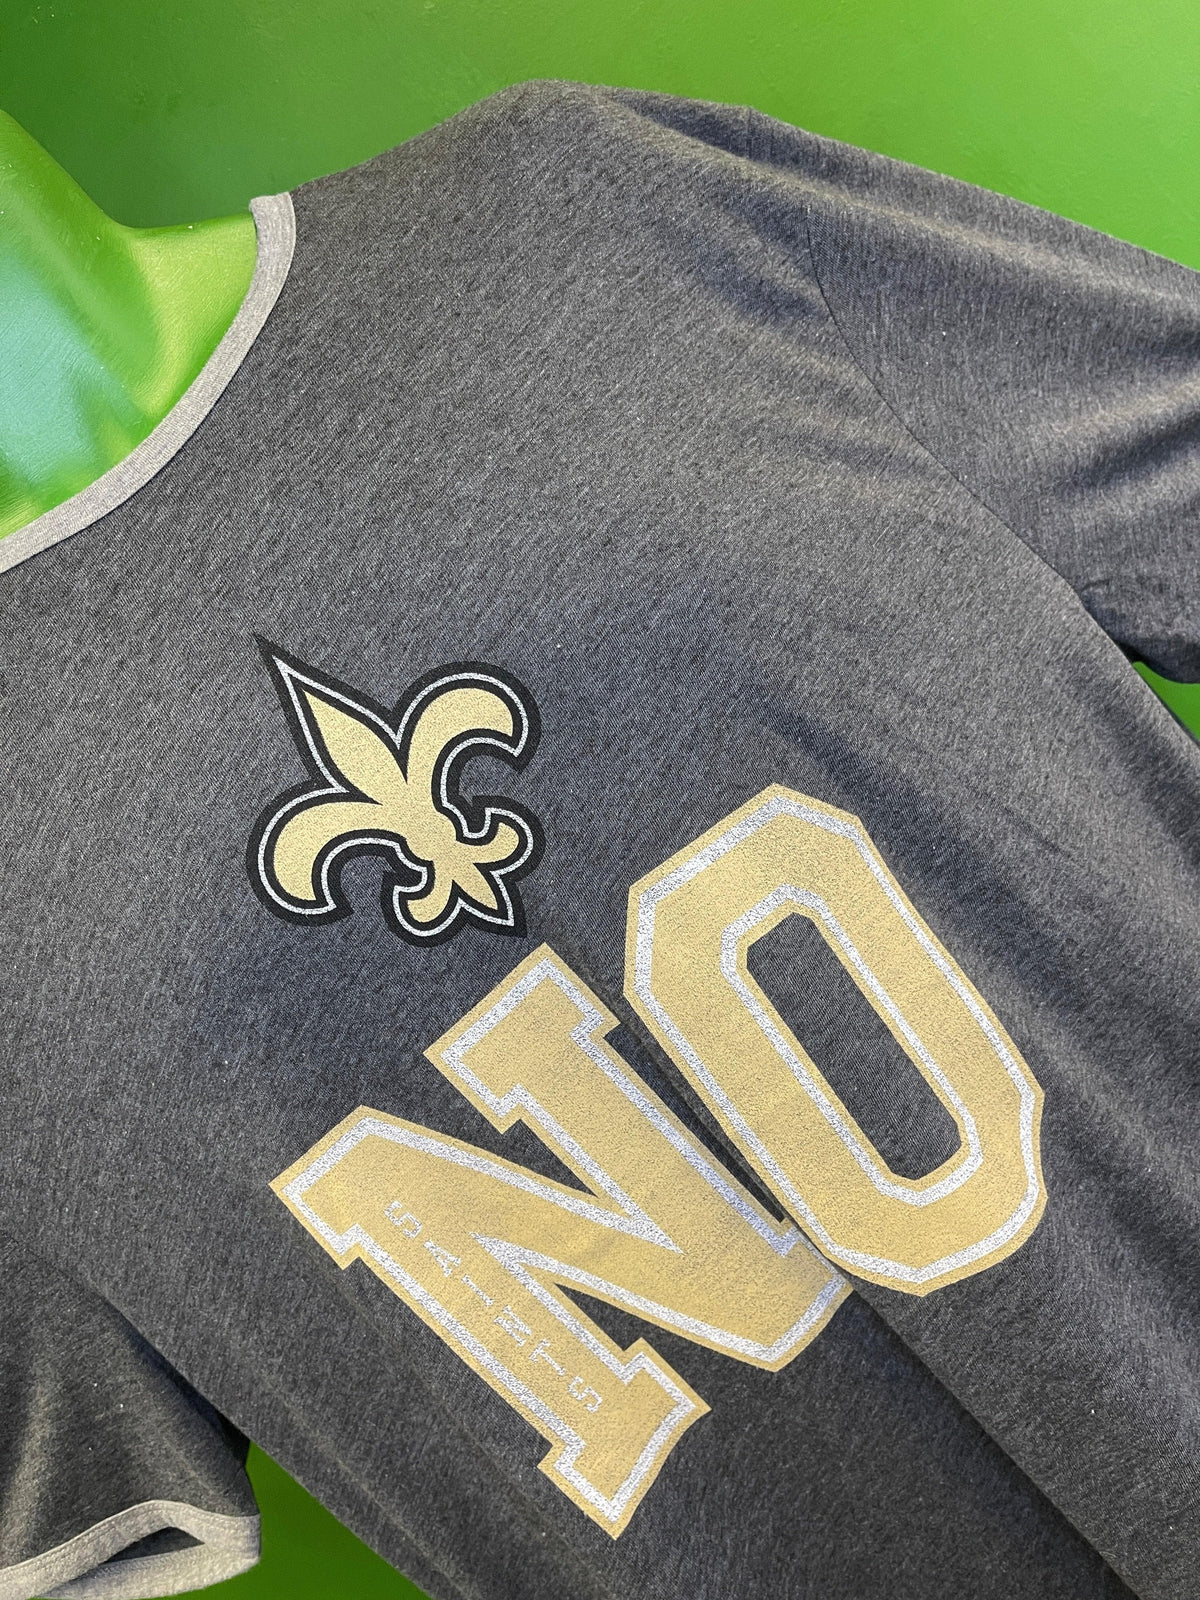 NFL New Orleans Saints Soft Heathered Grey T-Shirt Men's X-Large NWT